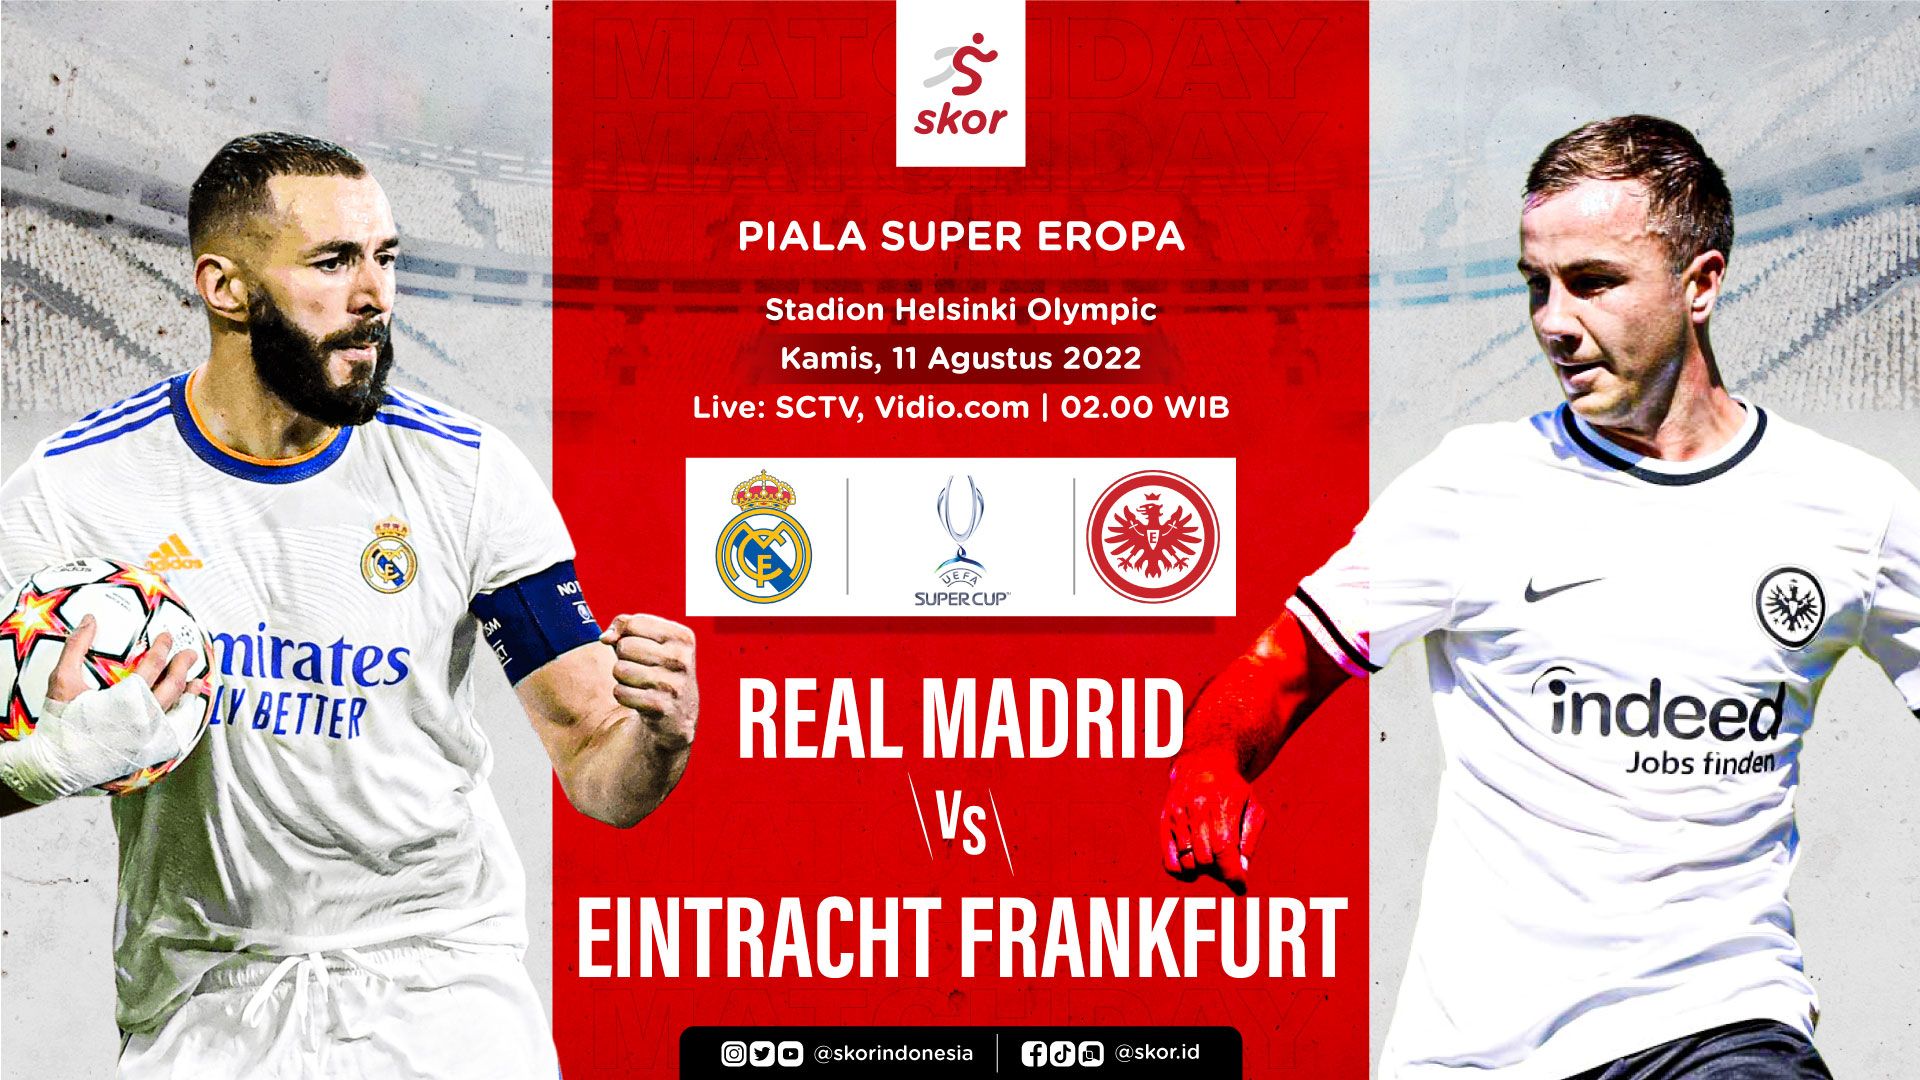 Piala Super Eropa 2022, Real Madrid vs Eintracht Frankfurt